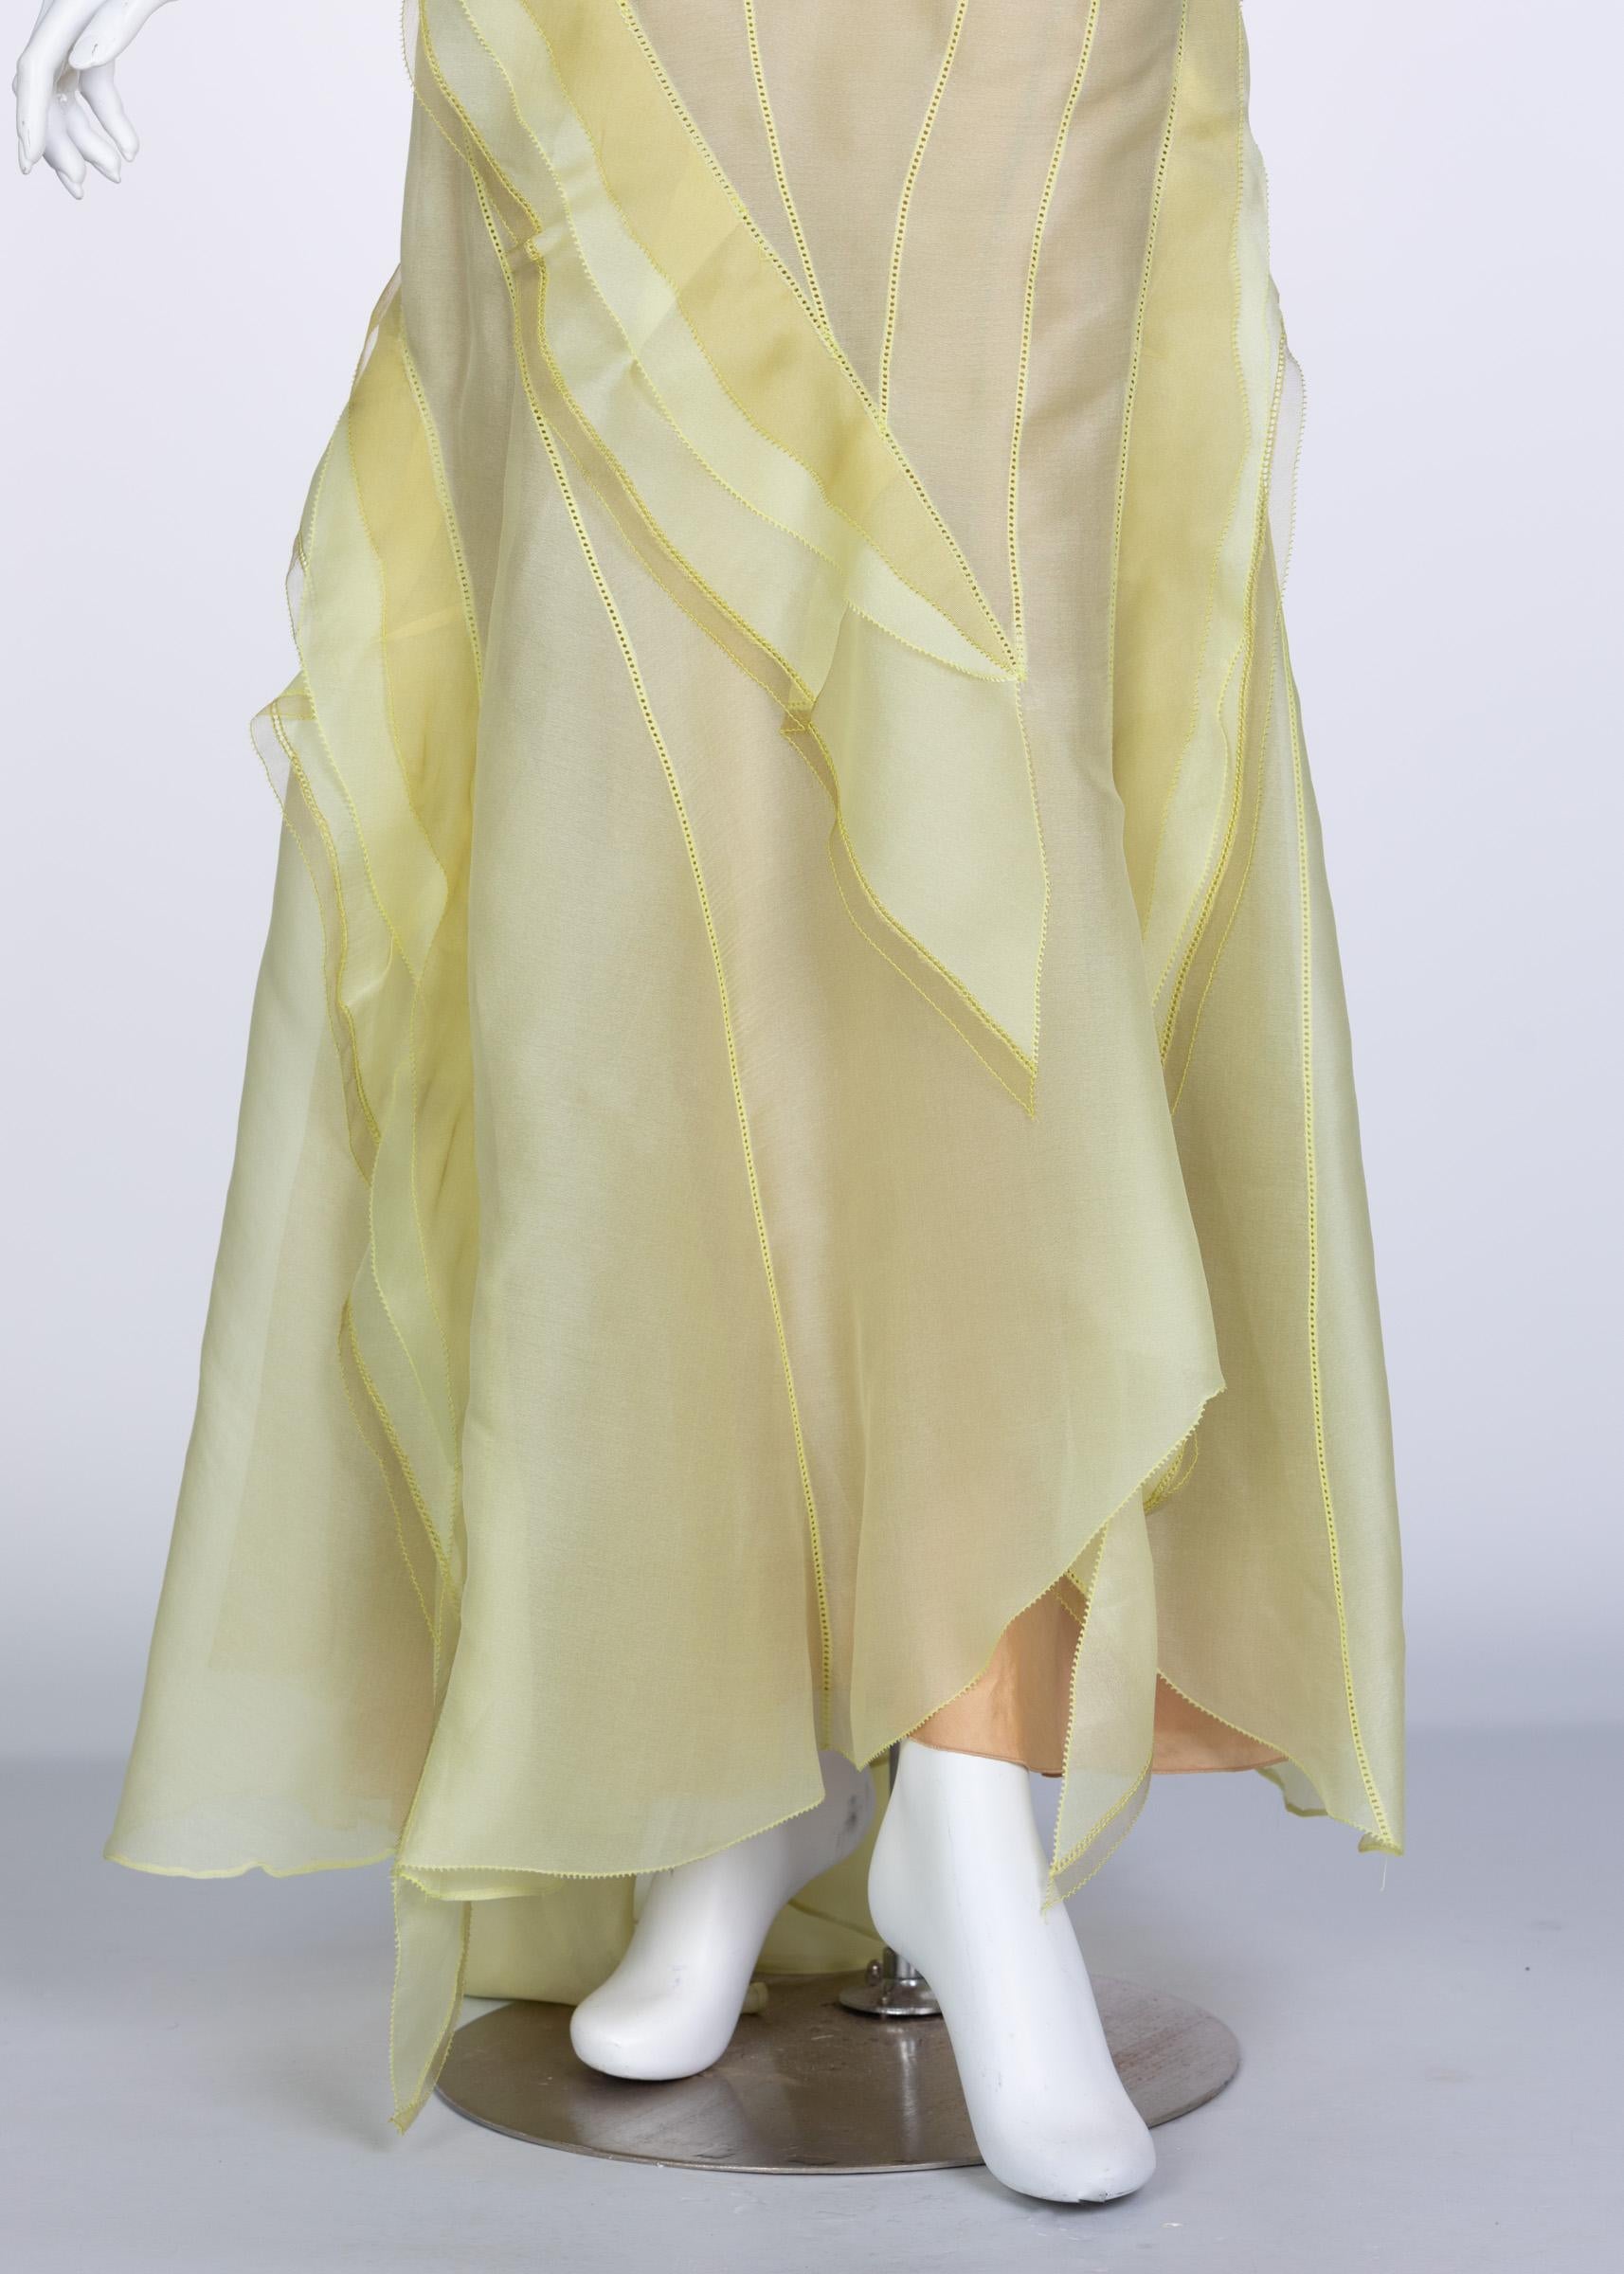 Nina Ricci Yellow Silk Organza Sleeveless Evening Dress, 2009 2